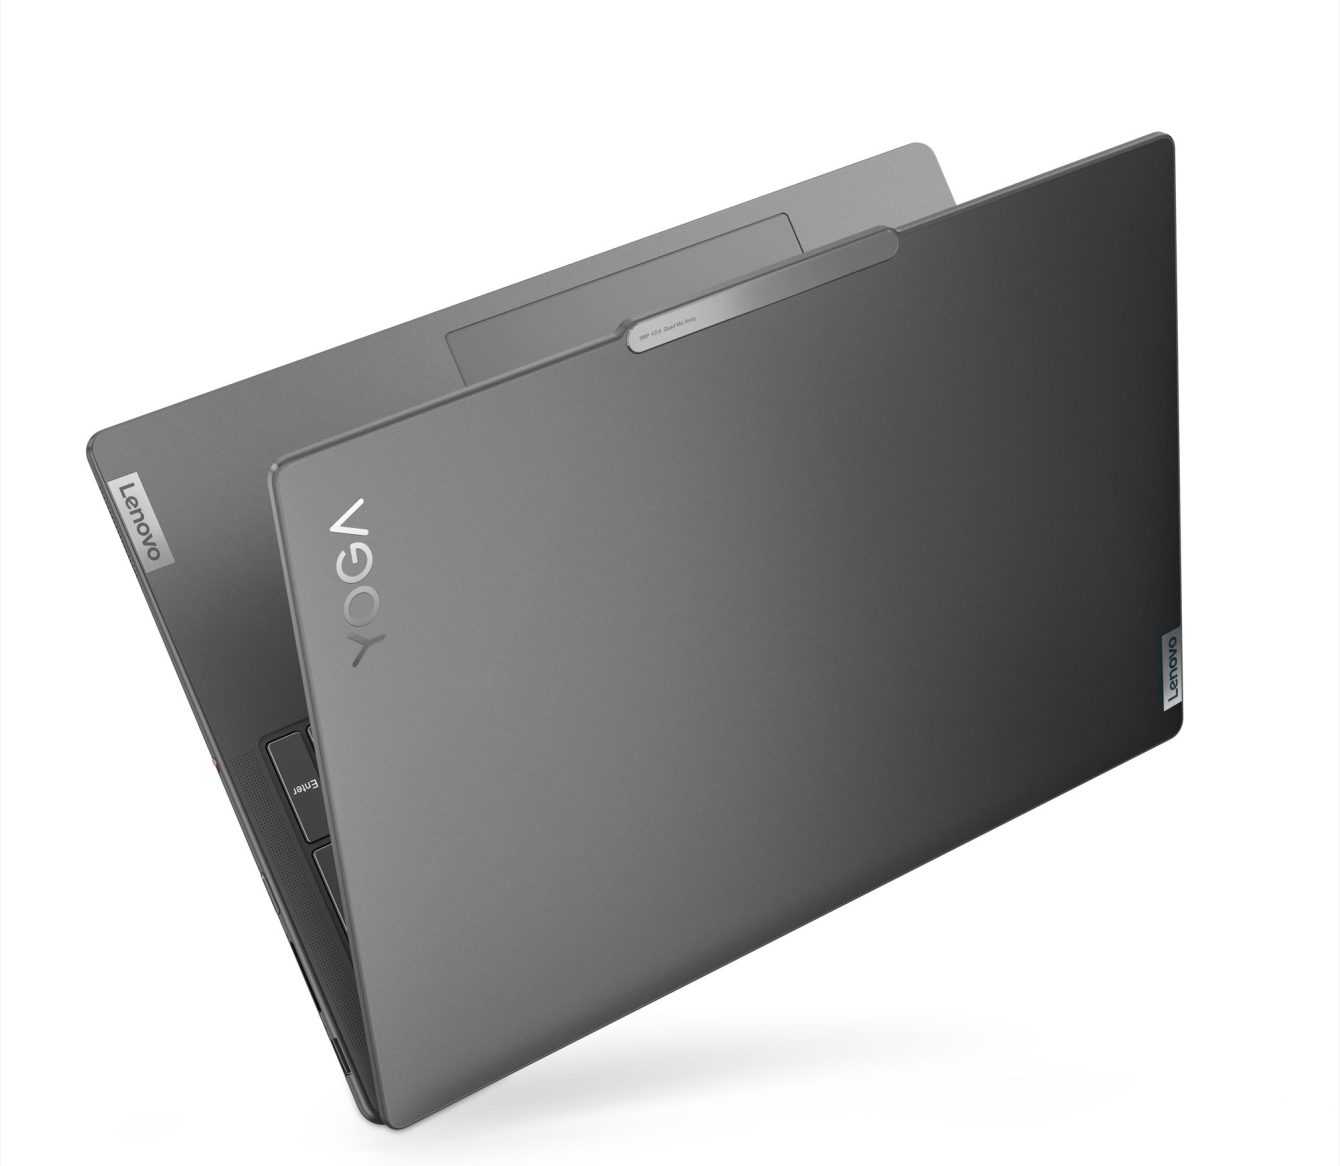 Lenovo: Introducing the new range of Yoga laptops